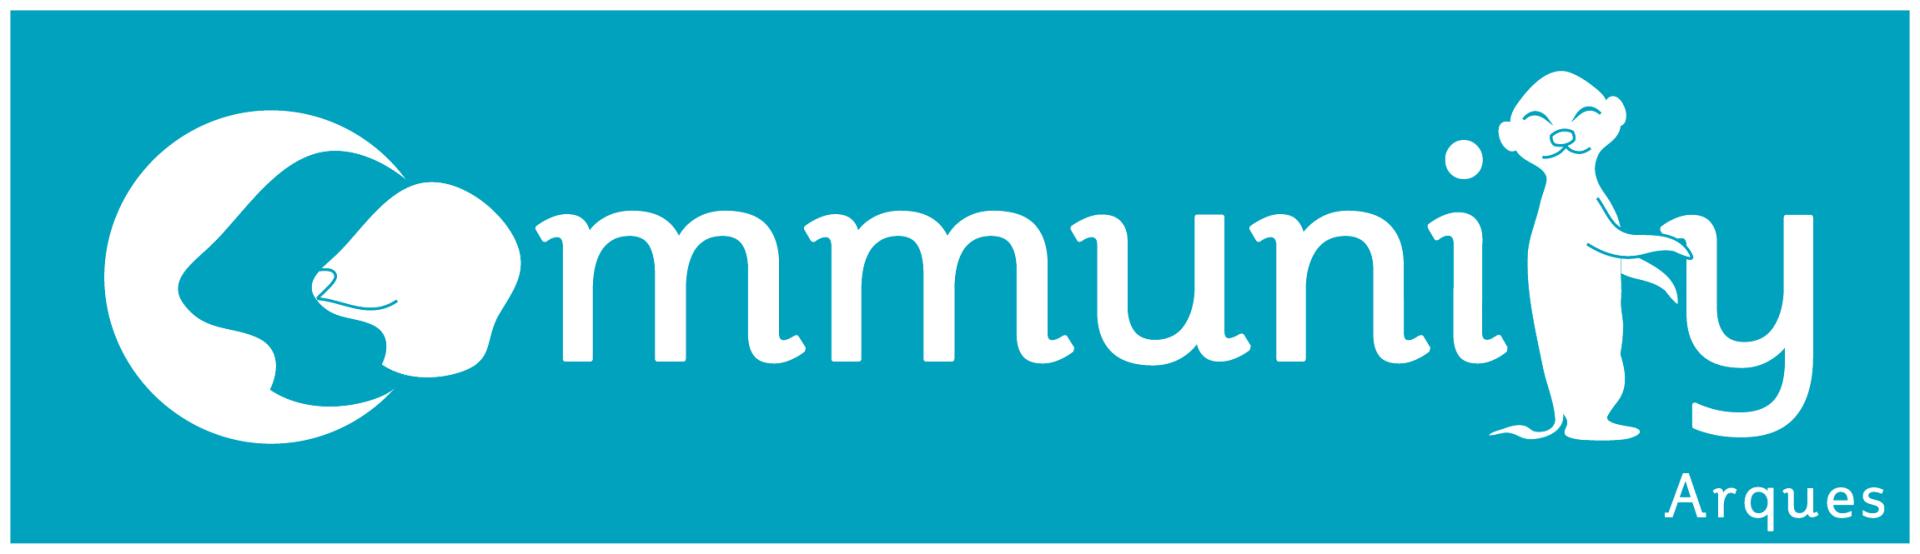 Association community logo